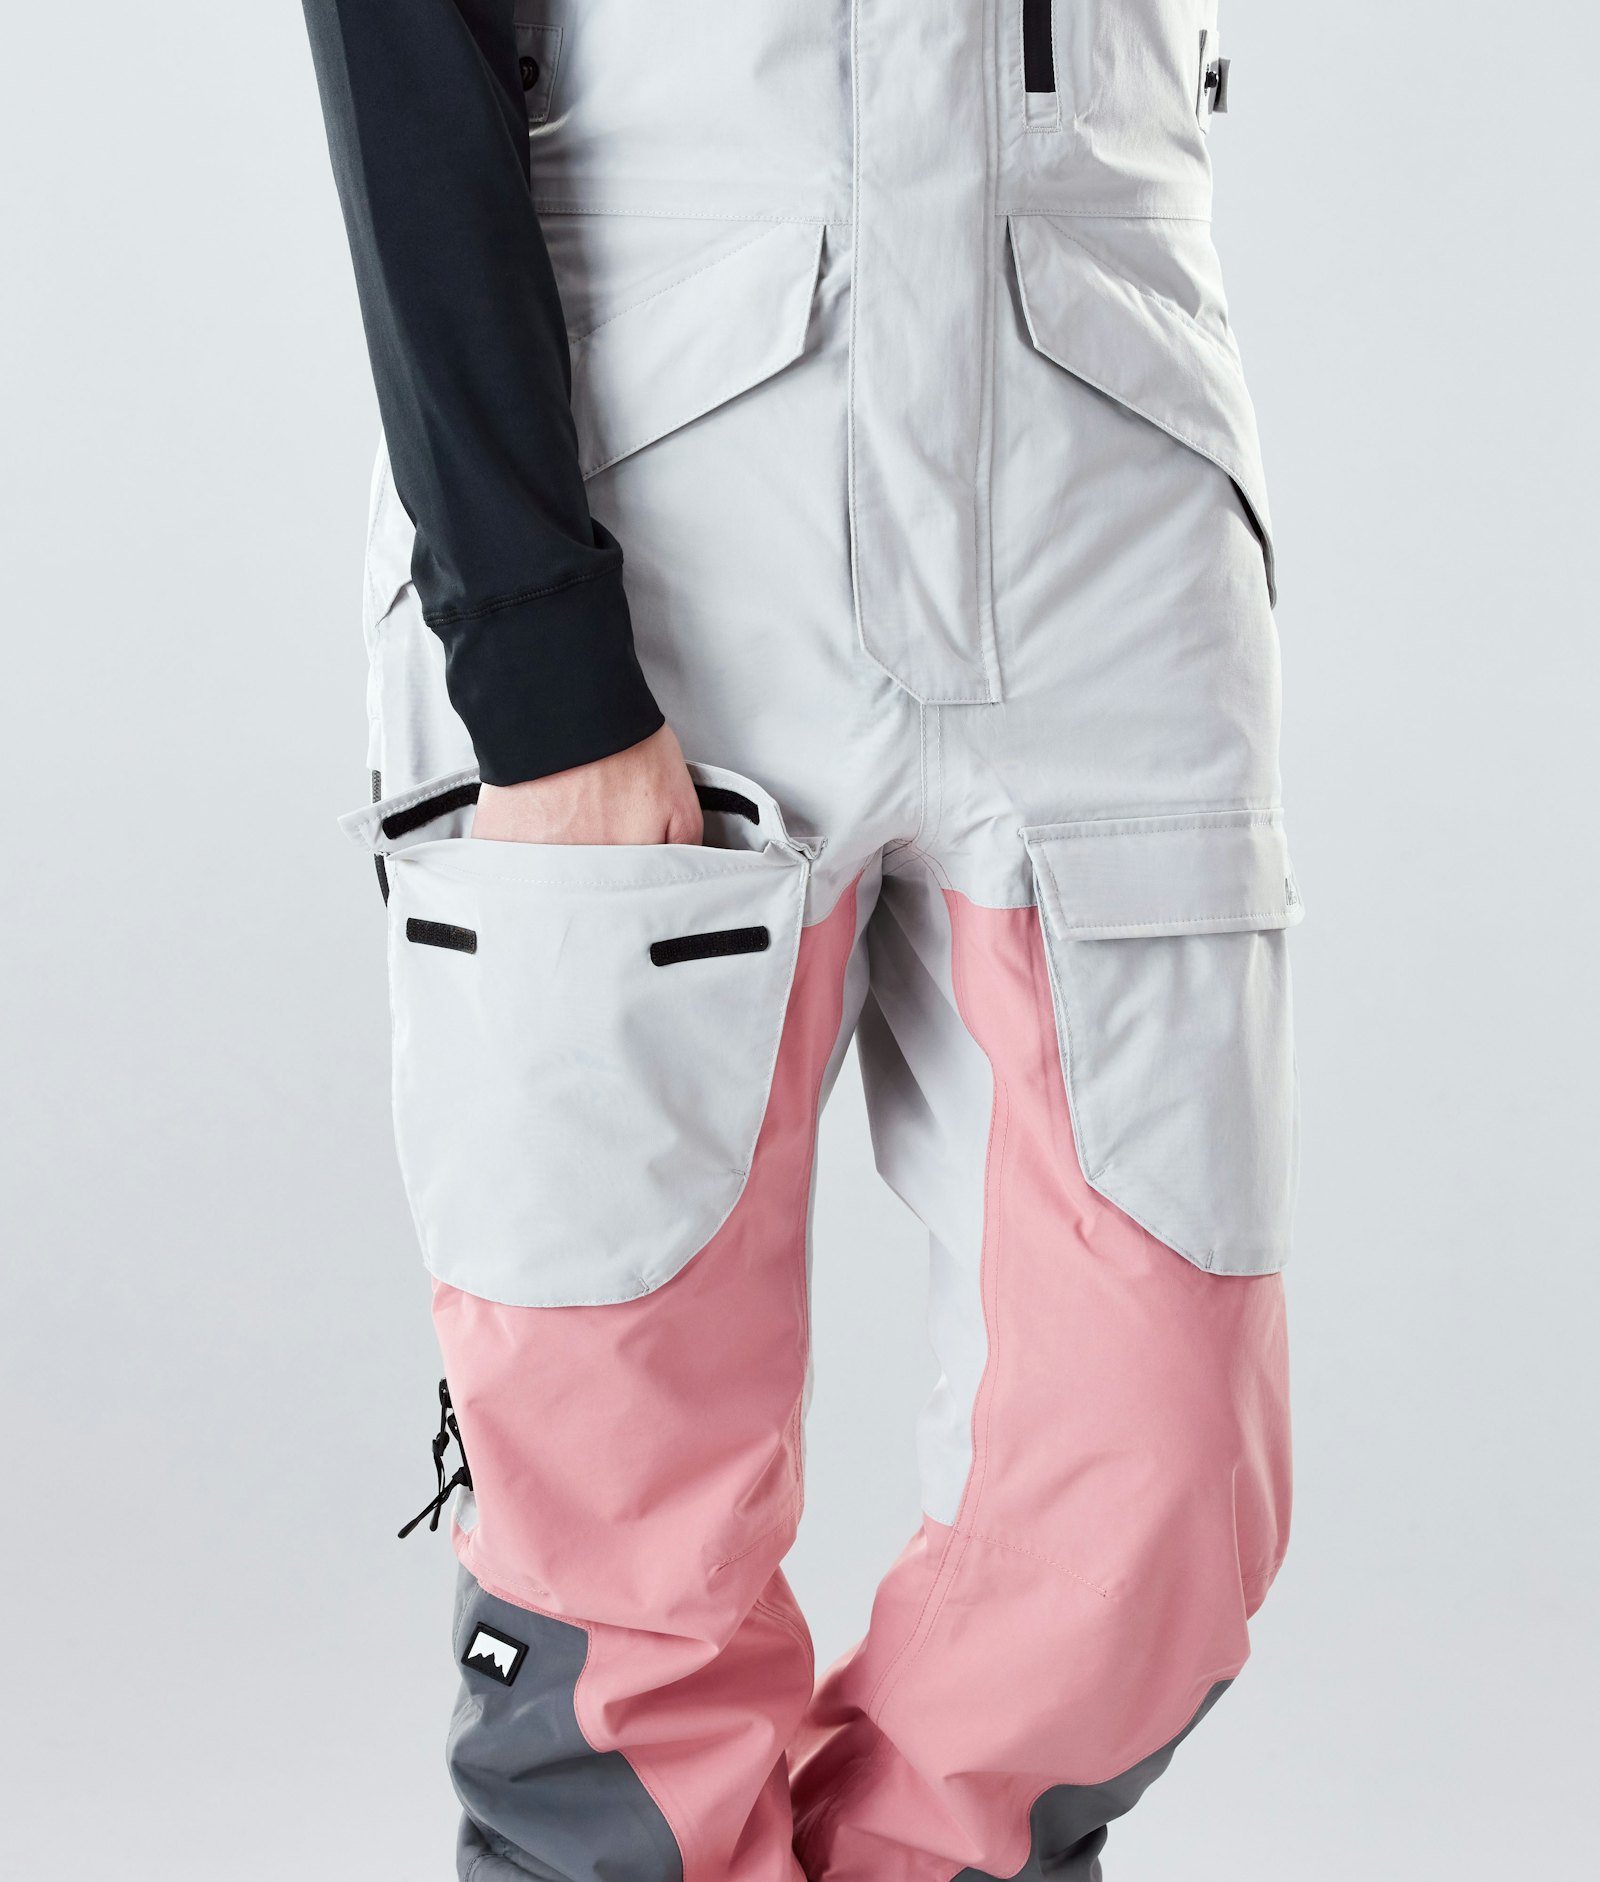 Fawk W 2020 Ski Pants Women Light Grey/Pink/Light Pearl